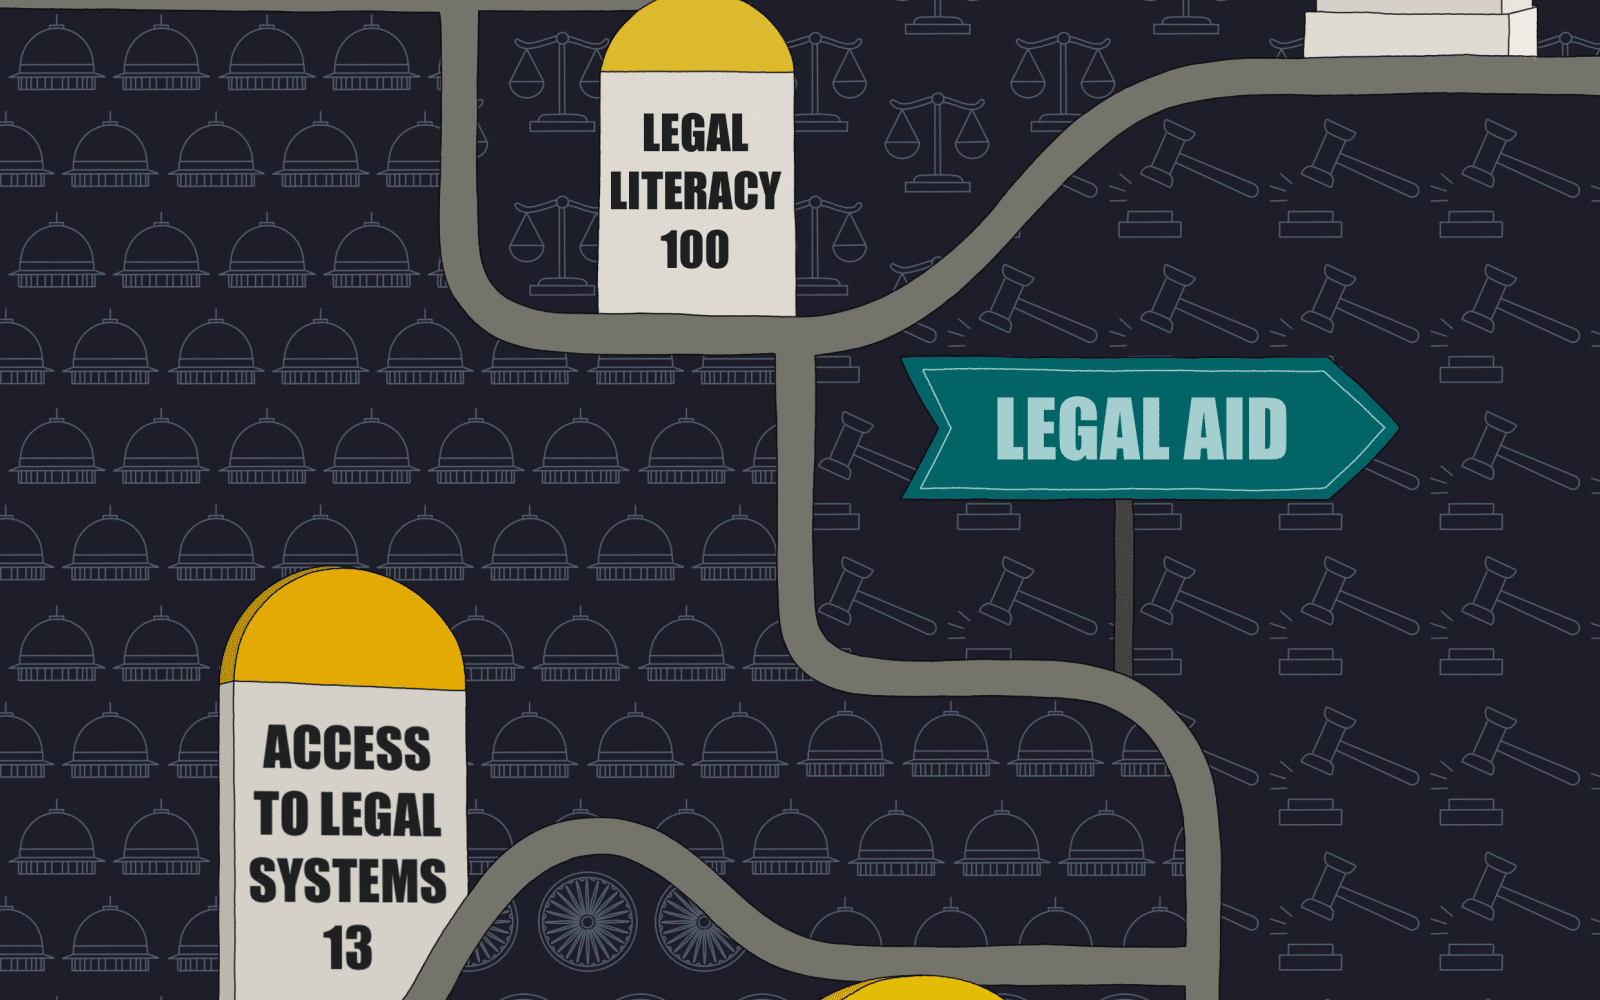 Roadmad illustration for legal literacy